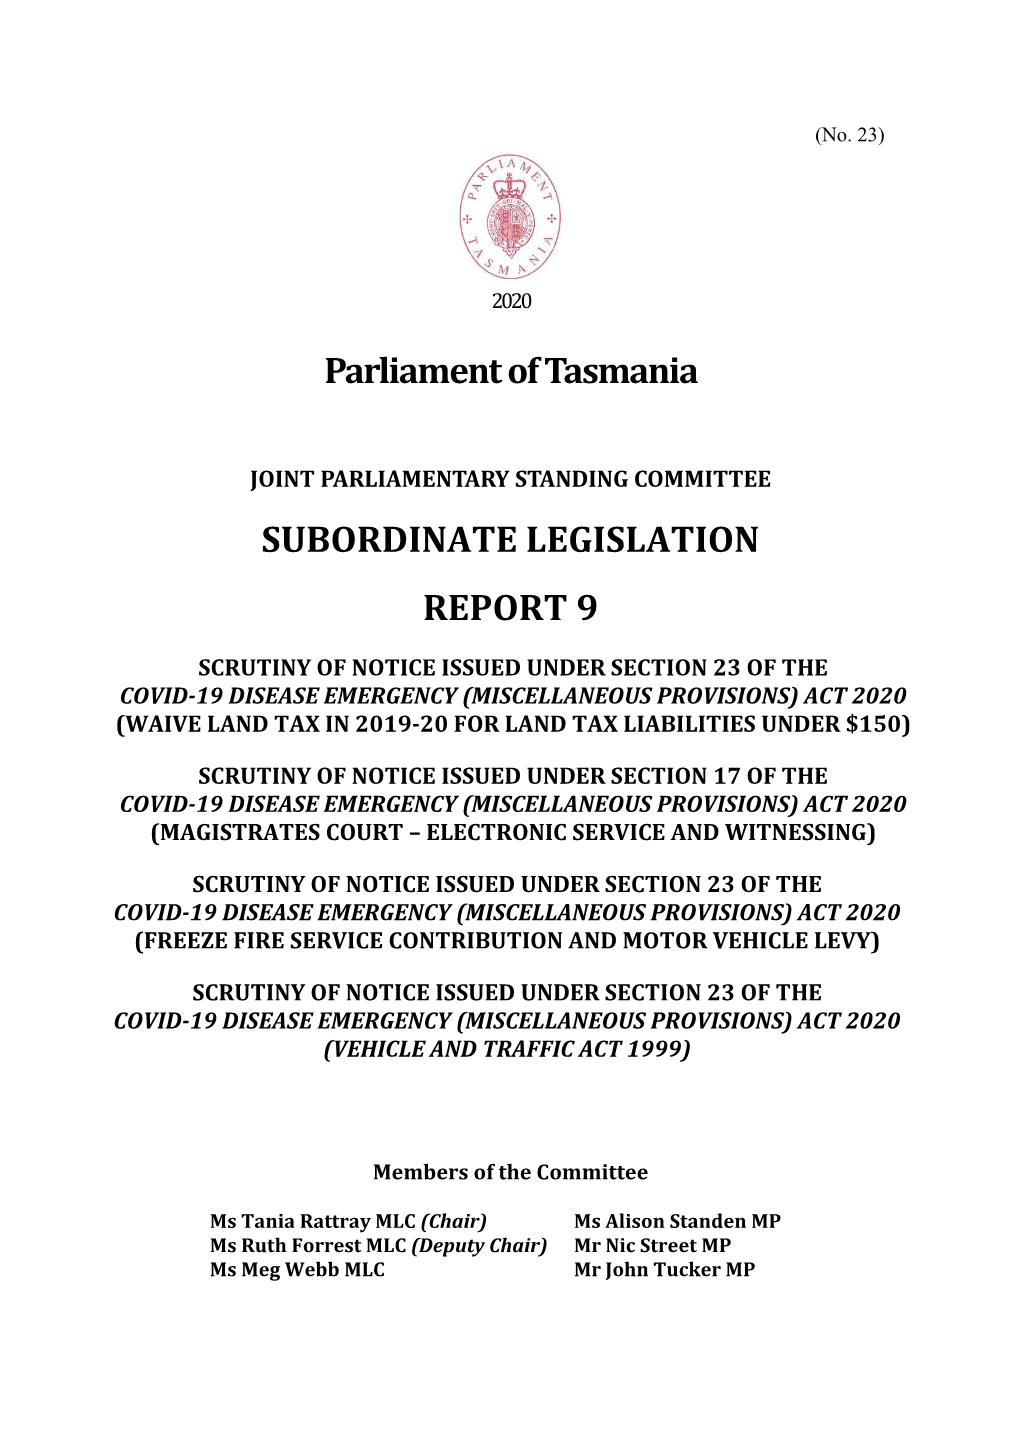 Parliament of Tasmania SUBORDINATE LEGISLATION